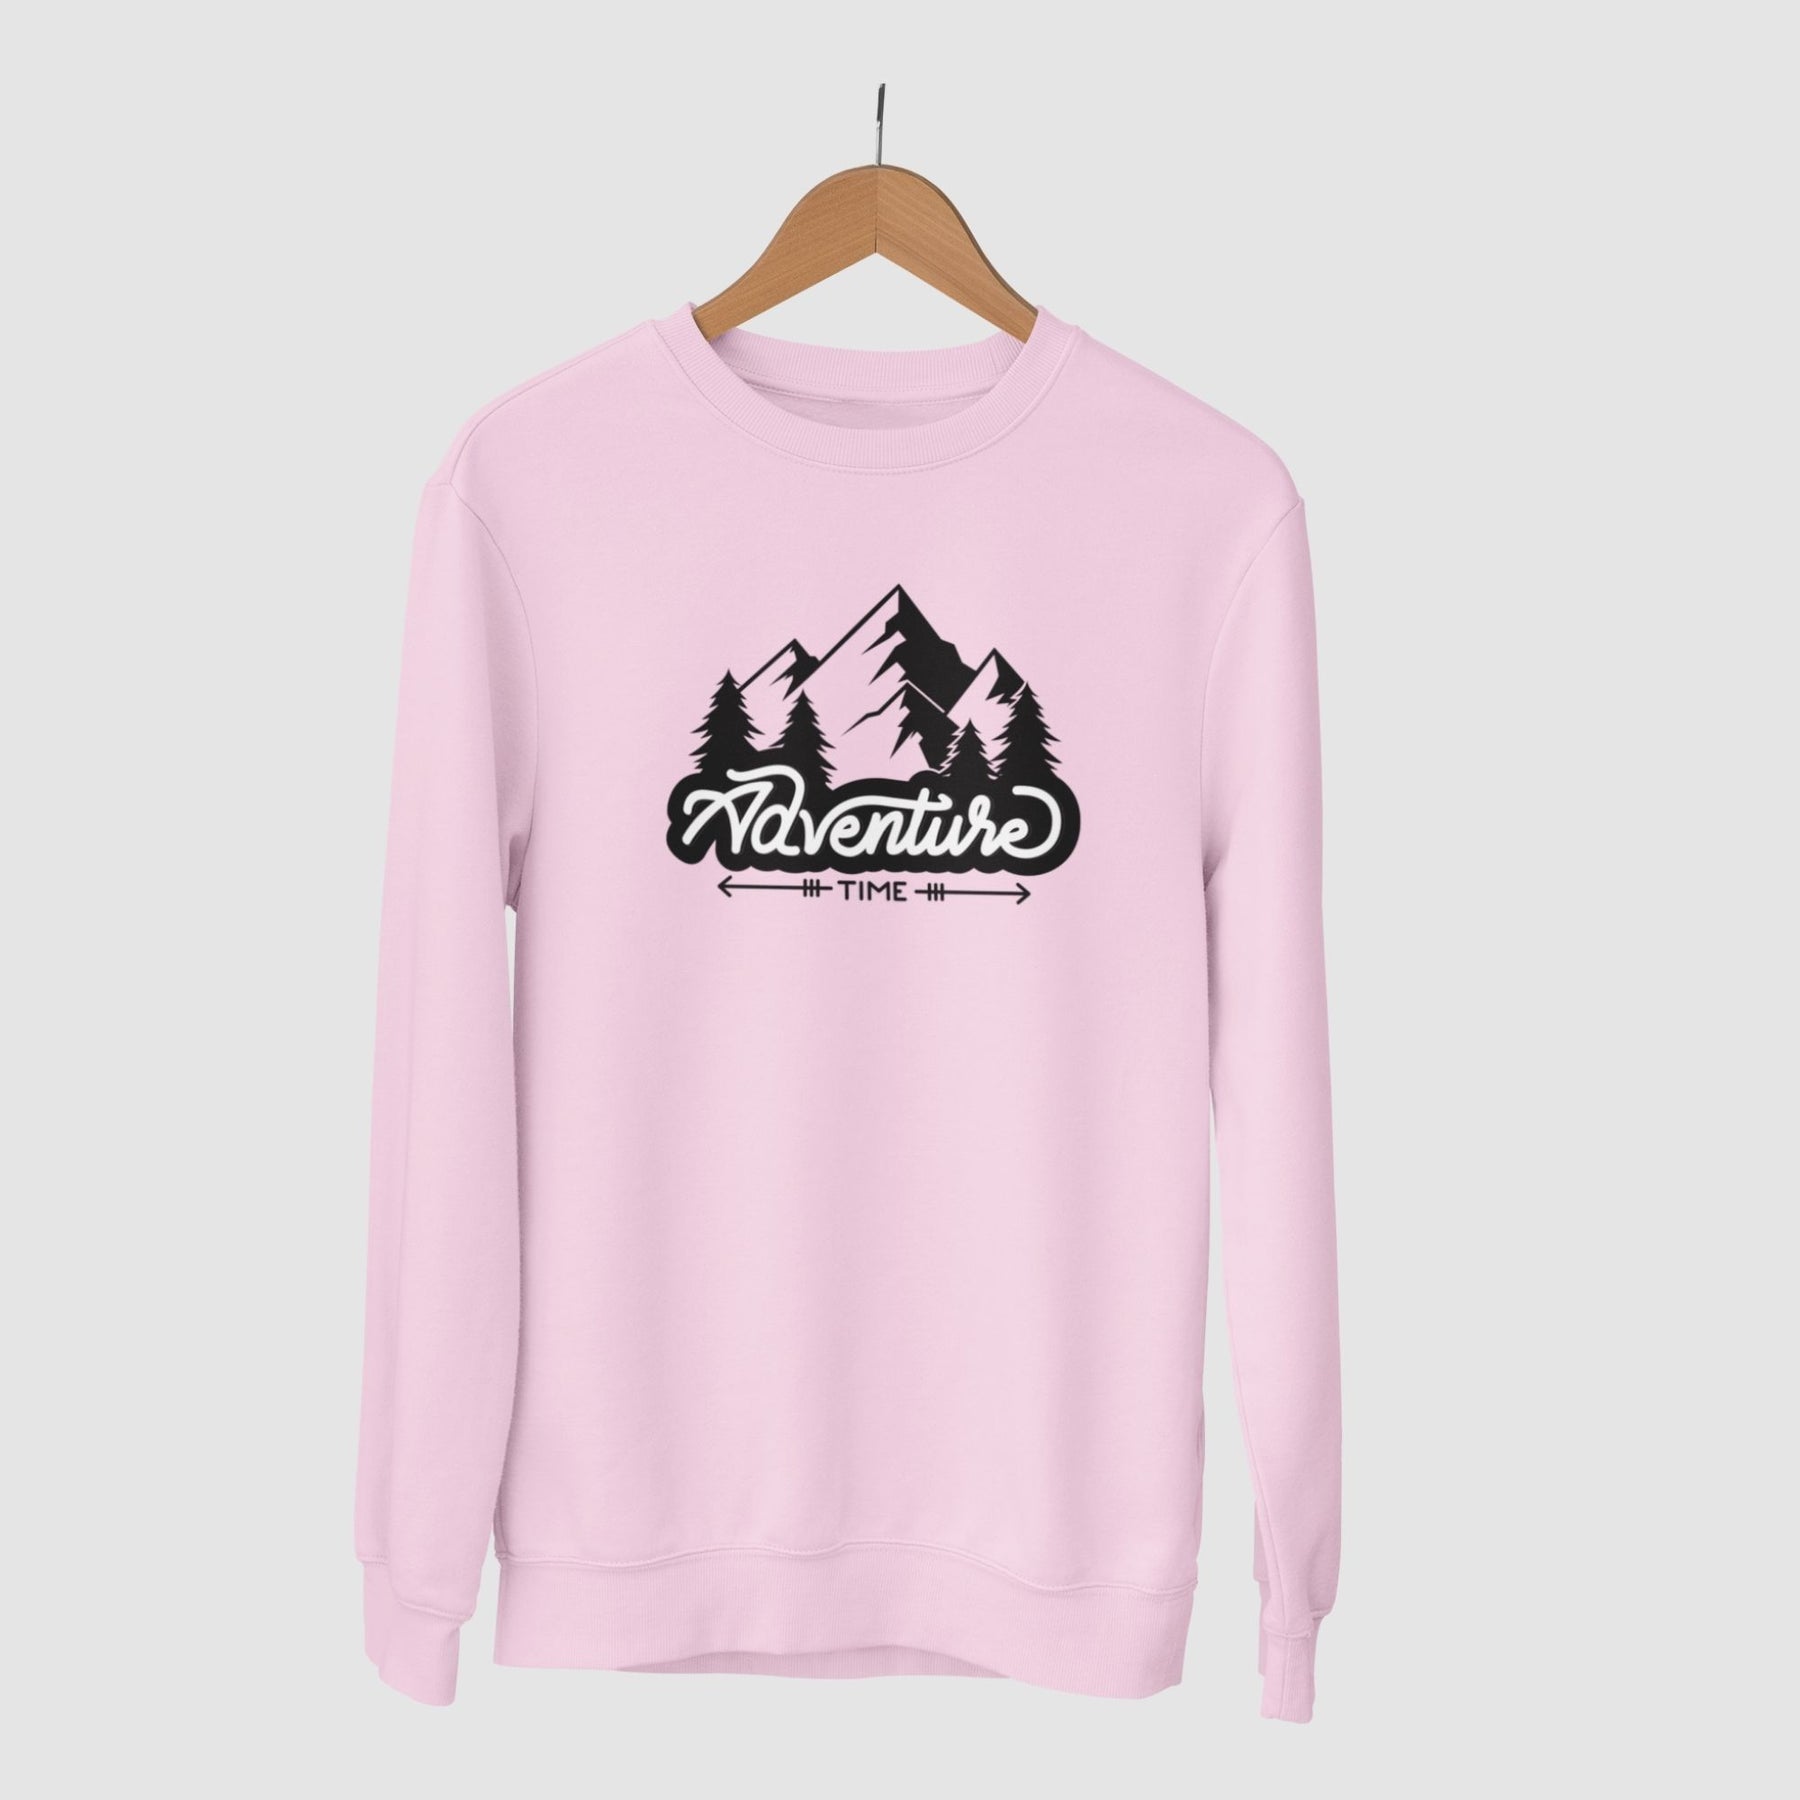 Adventure-cotton-printed-unisex-light-pink-sweatshirt-gogirgit-com